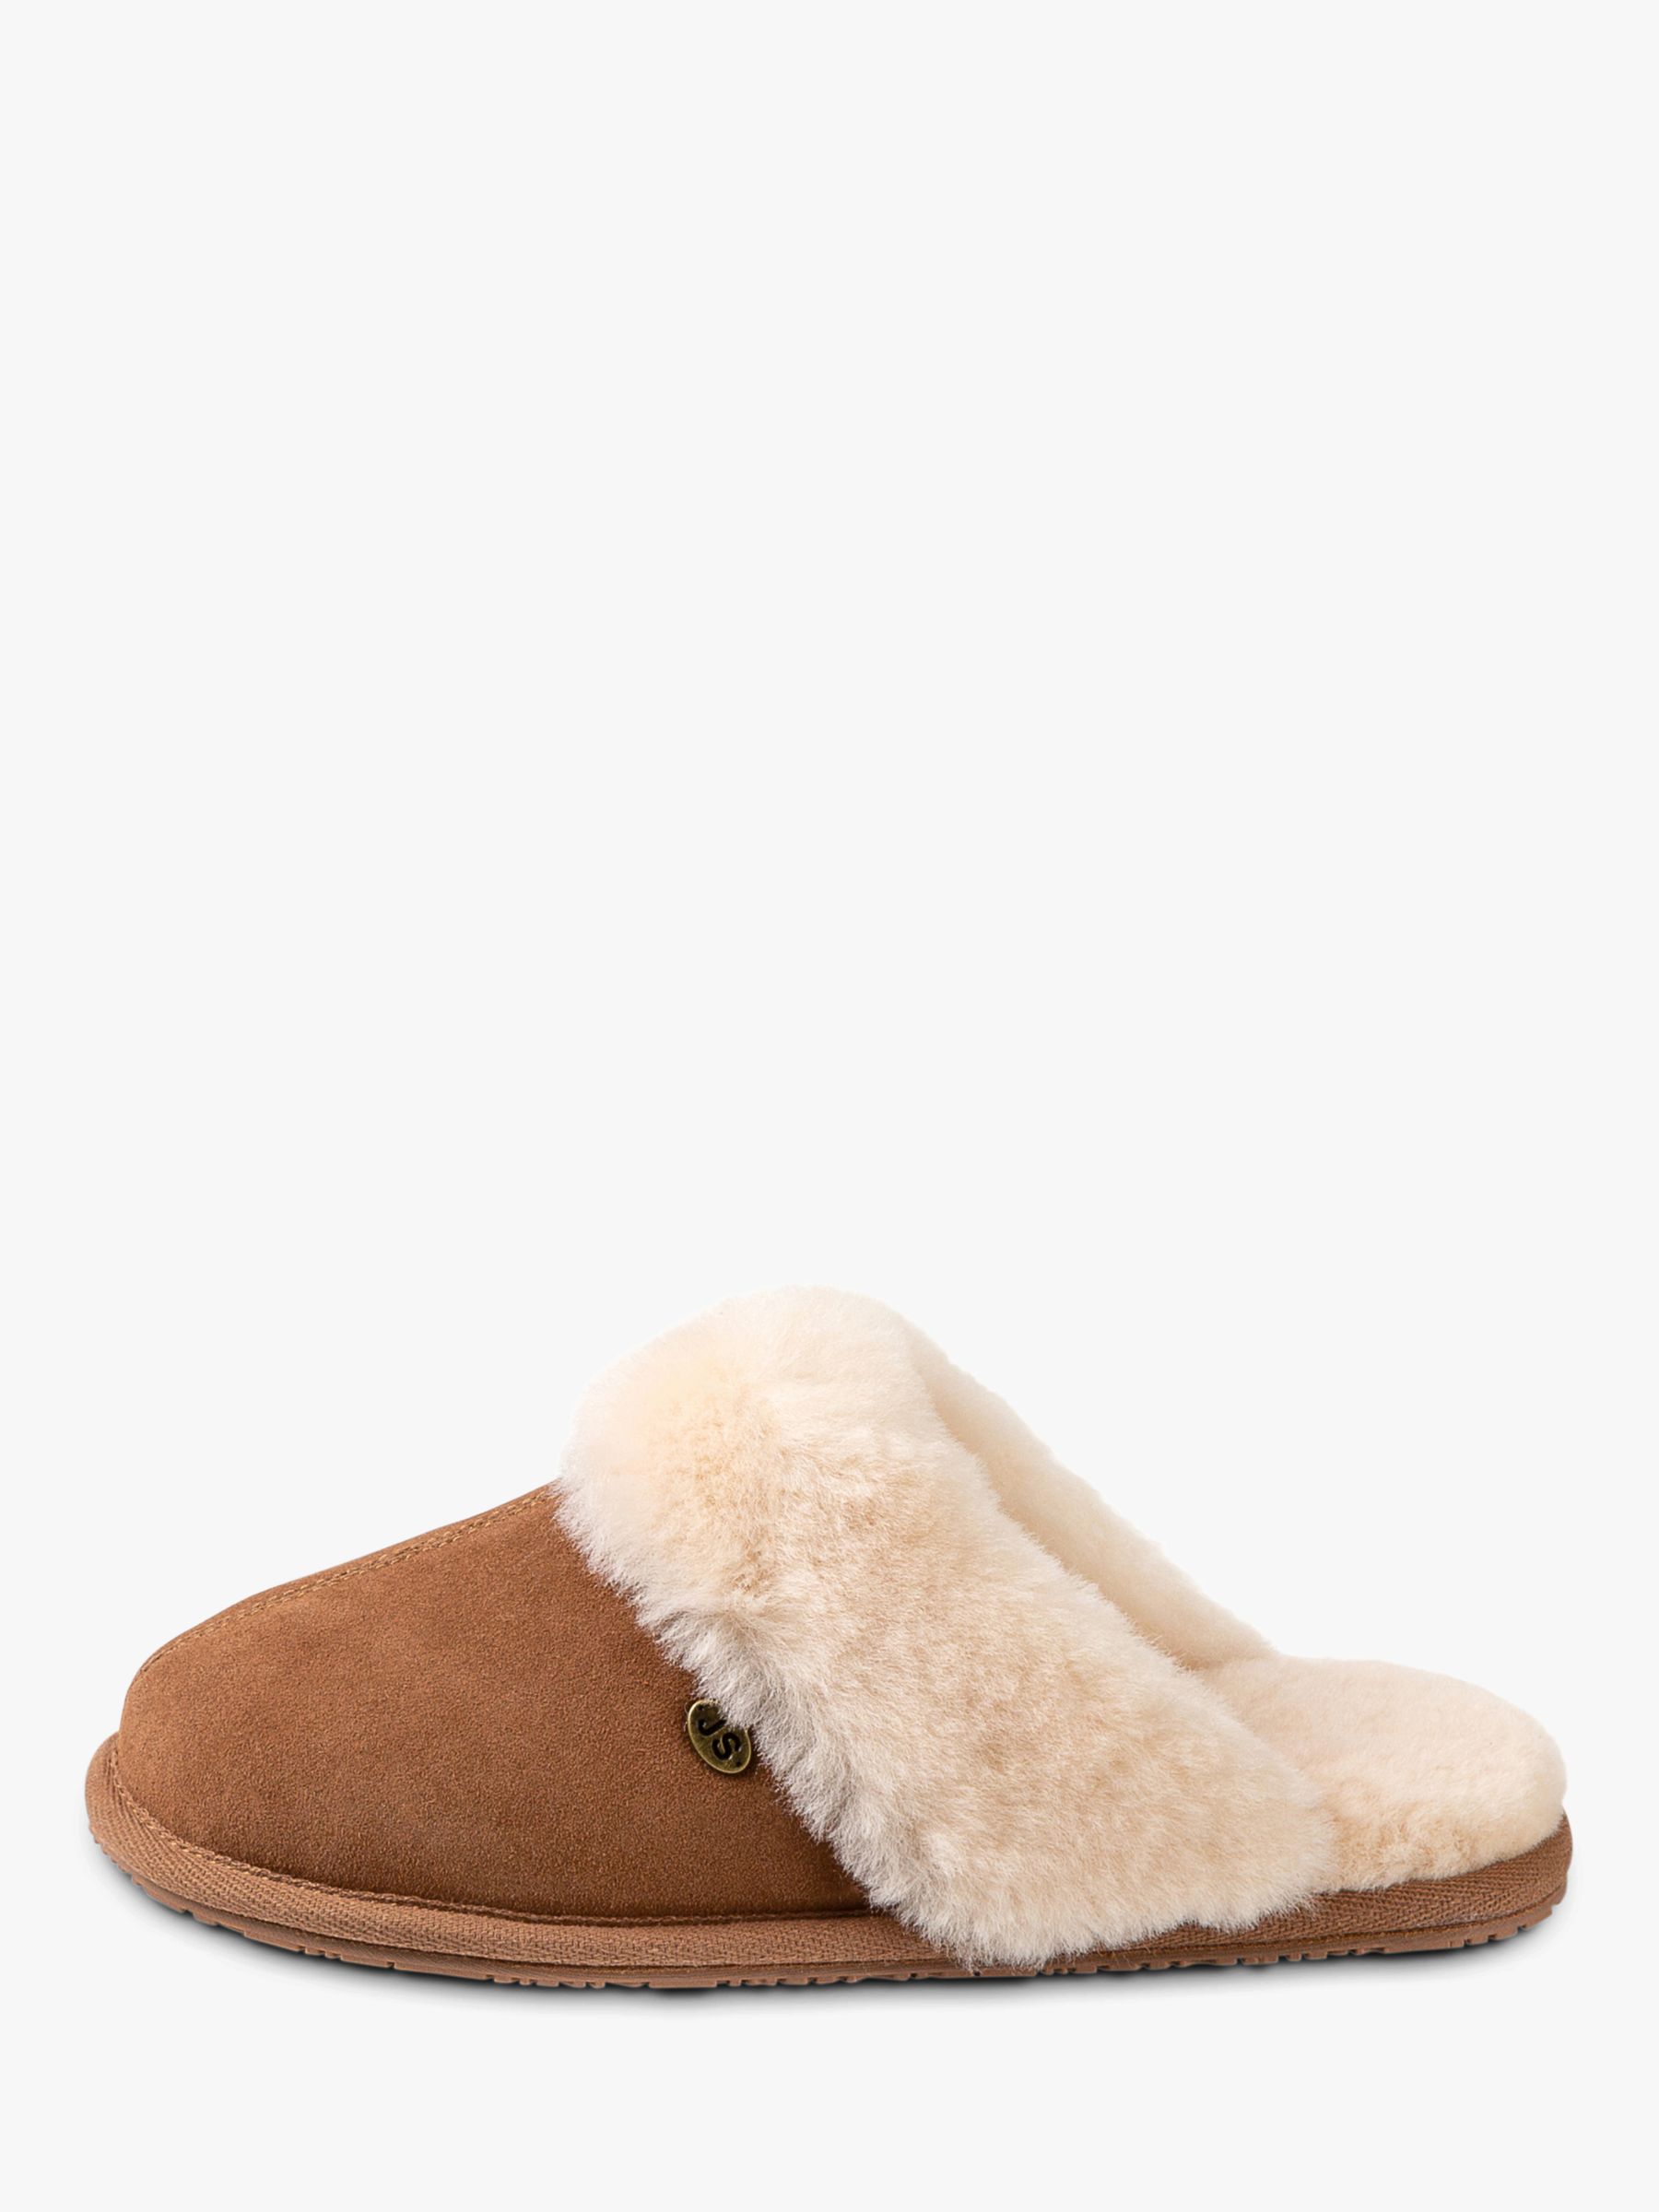 just sheepskin duchess slippers